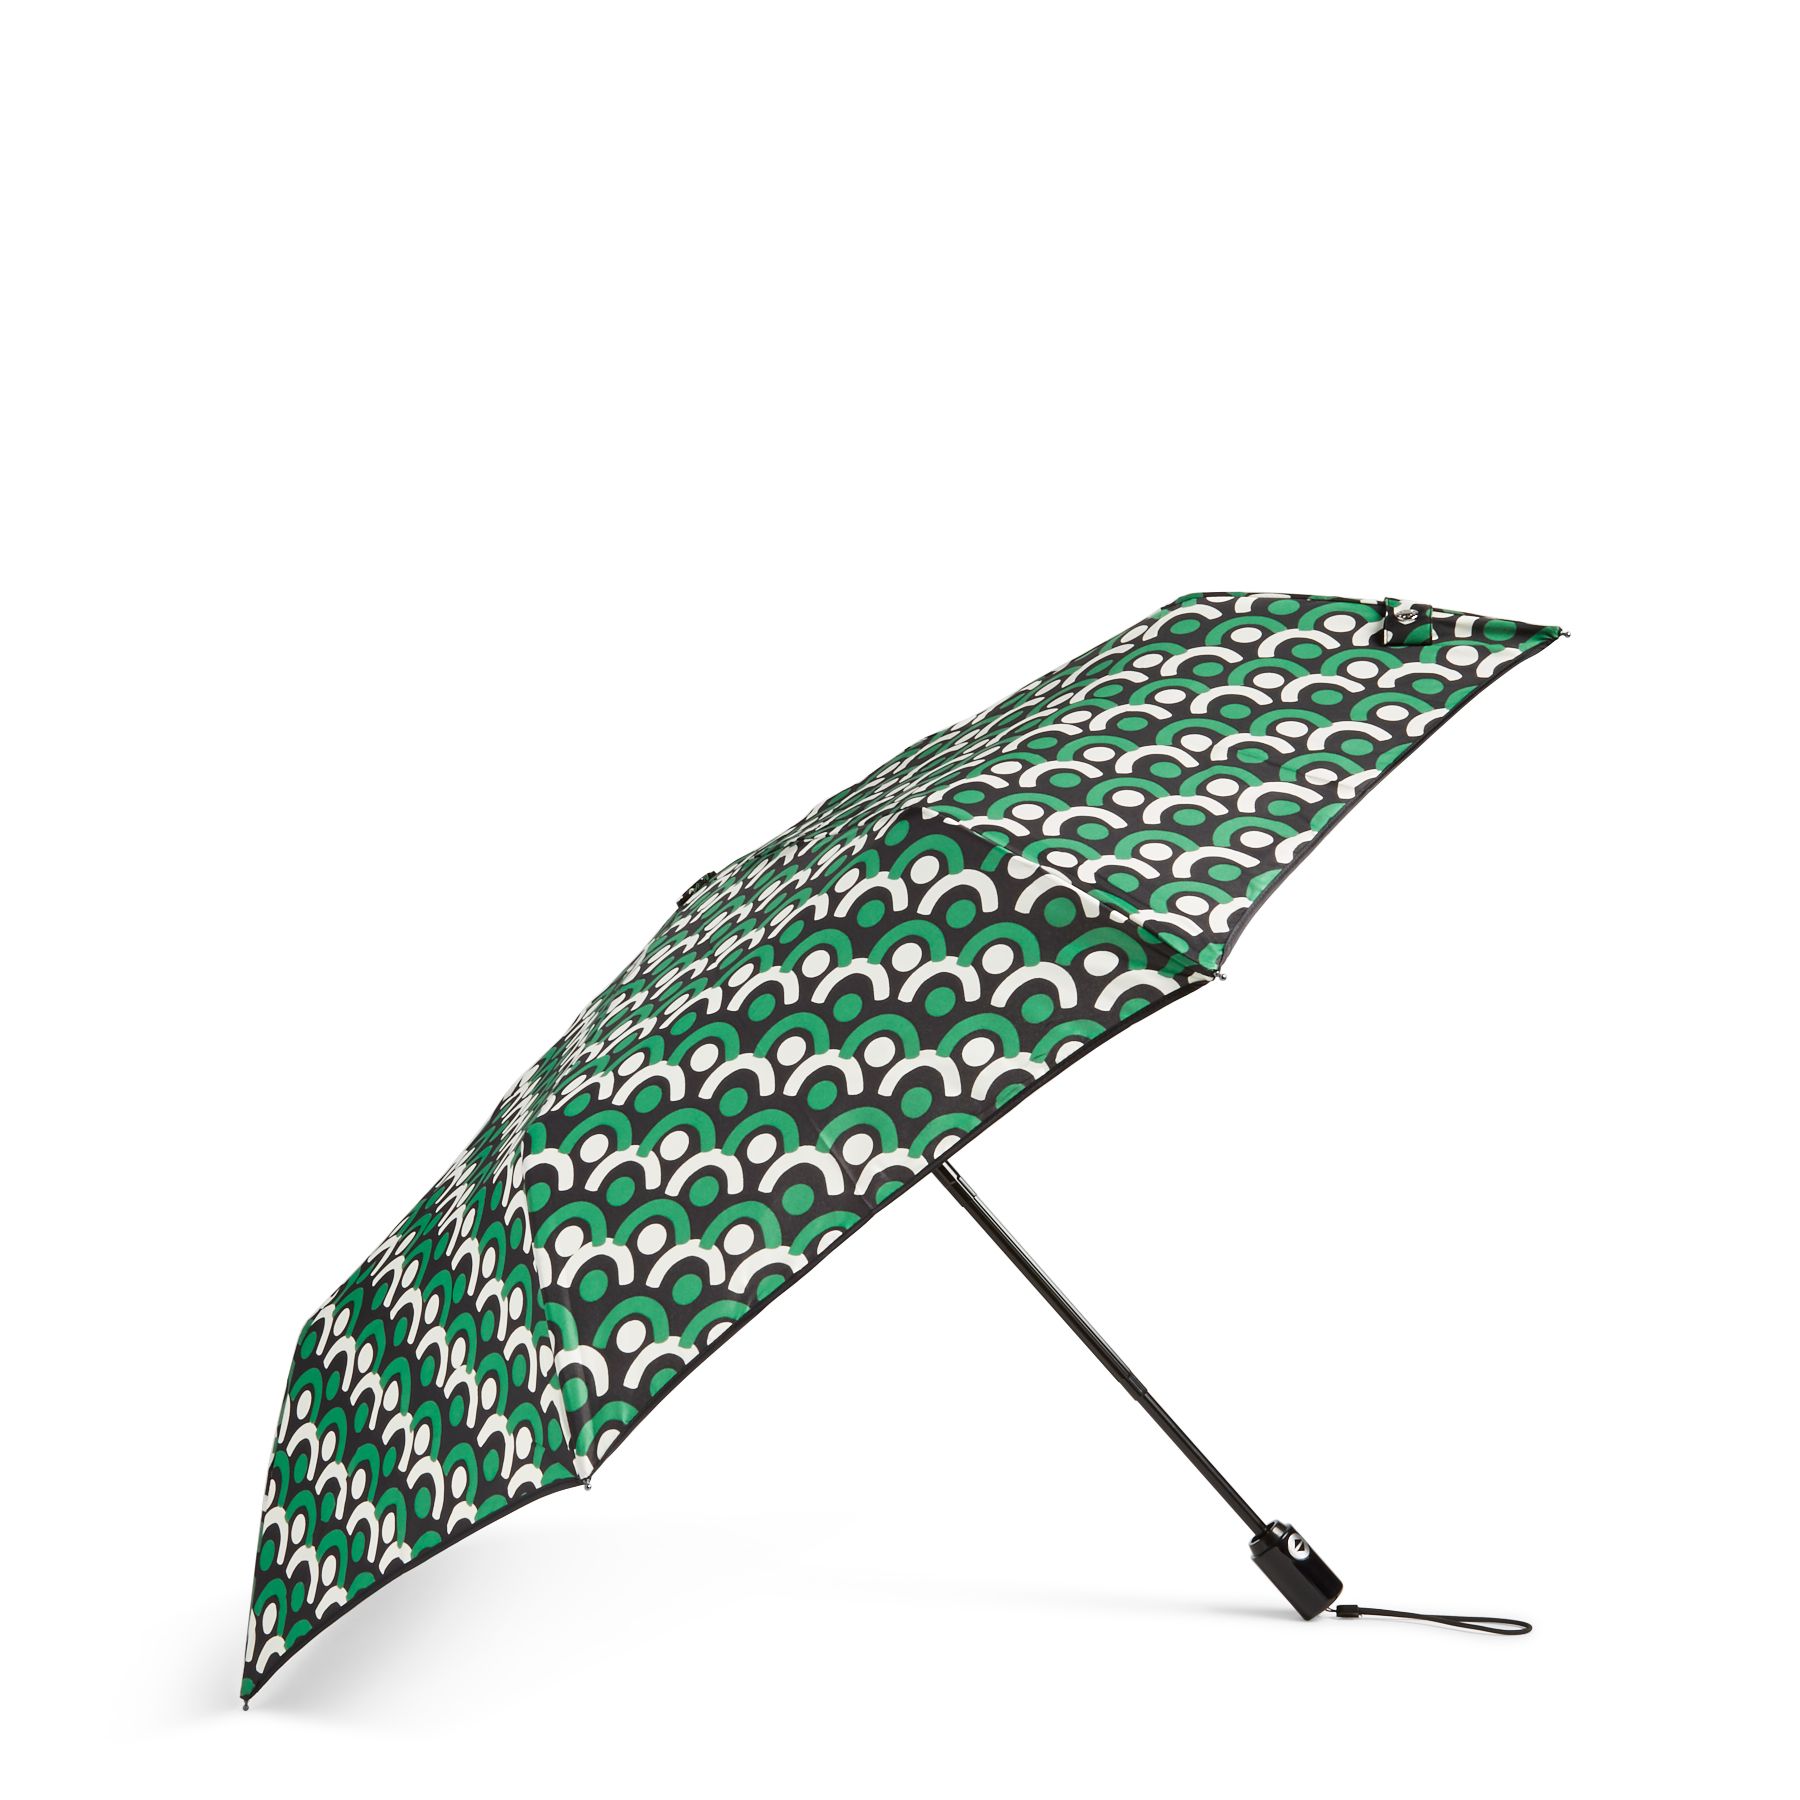 Vera Bradley Umbrella in Imperial TileOther Fashion Accessories